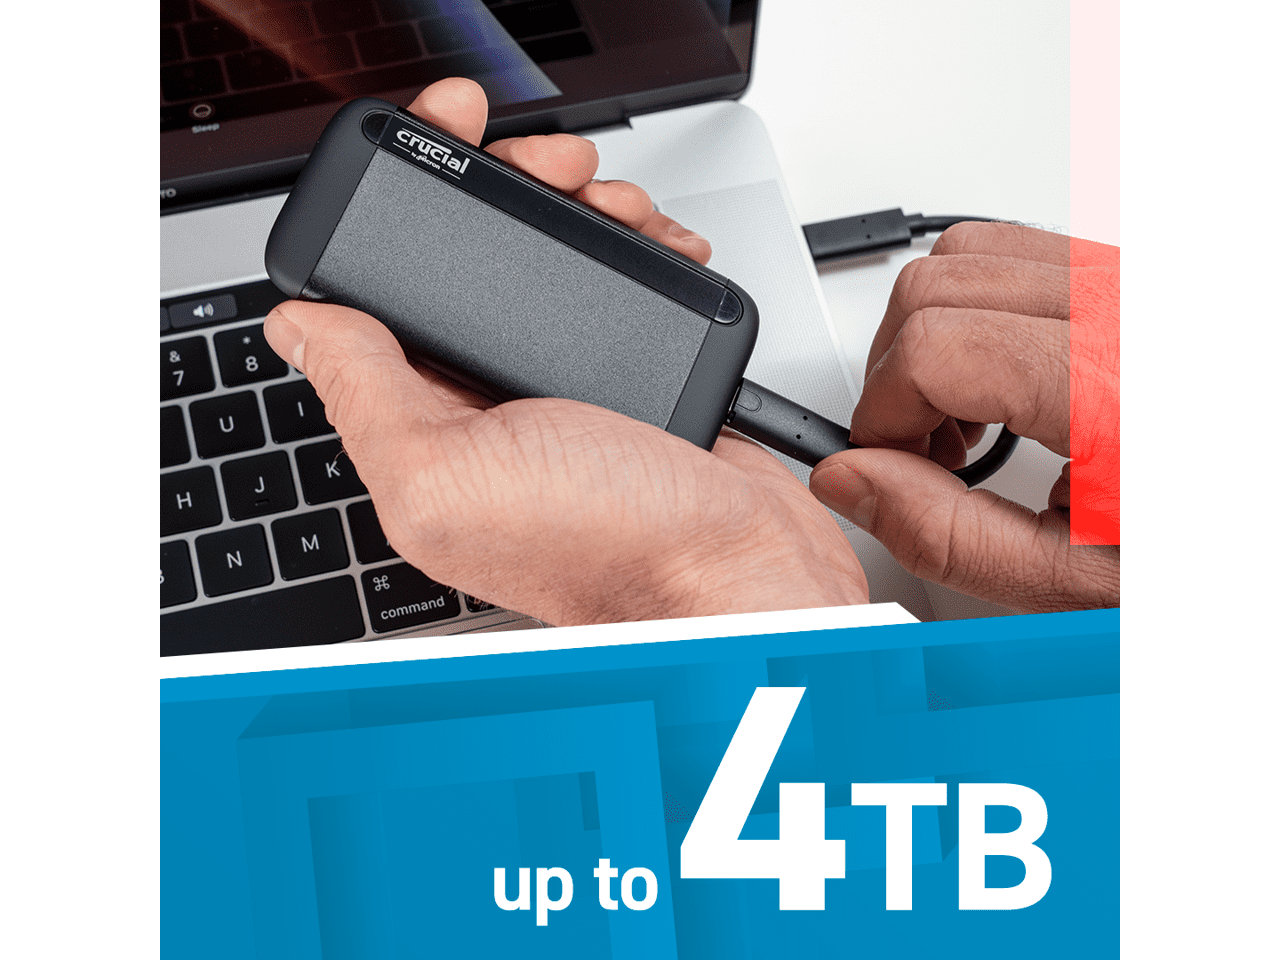 Crucial X8 1TB Portable SSD - Up to 1050 MB/s - USB 3.2 - External